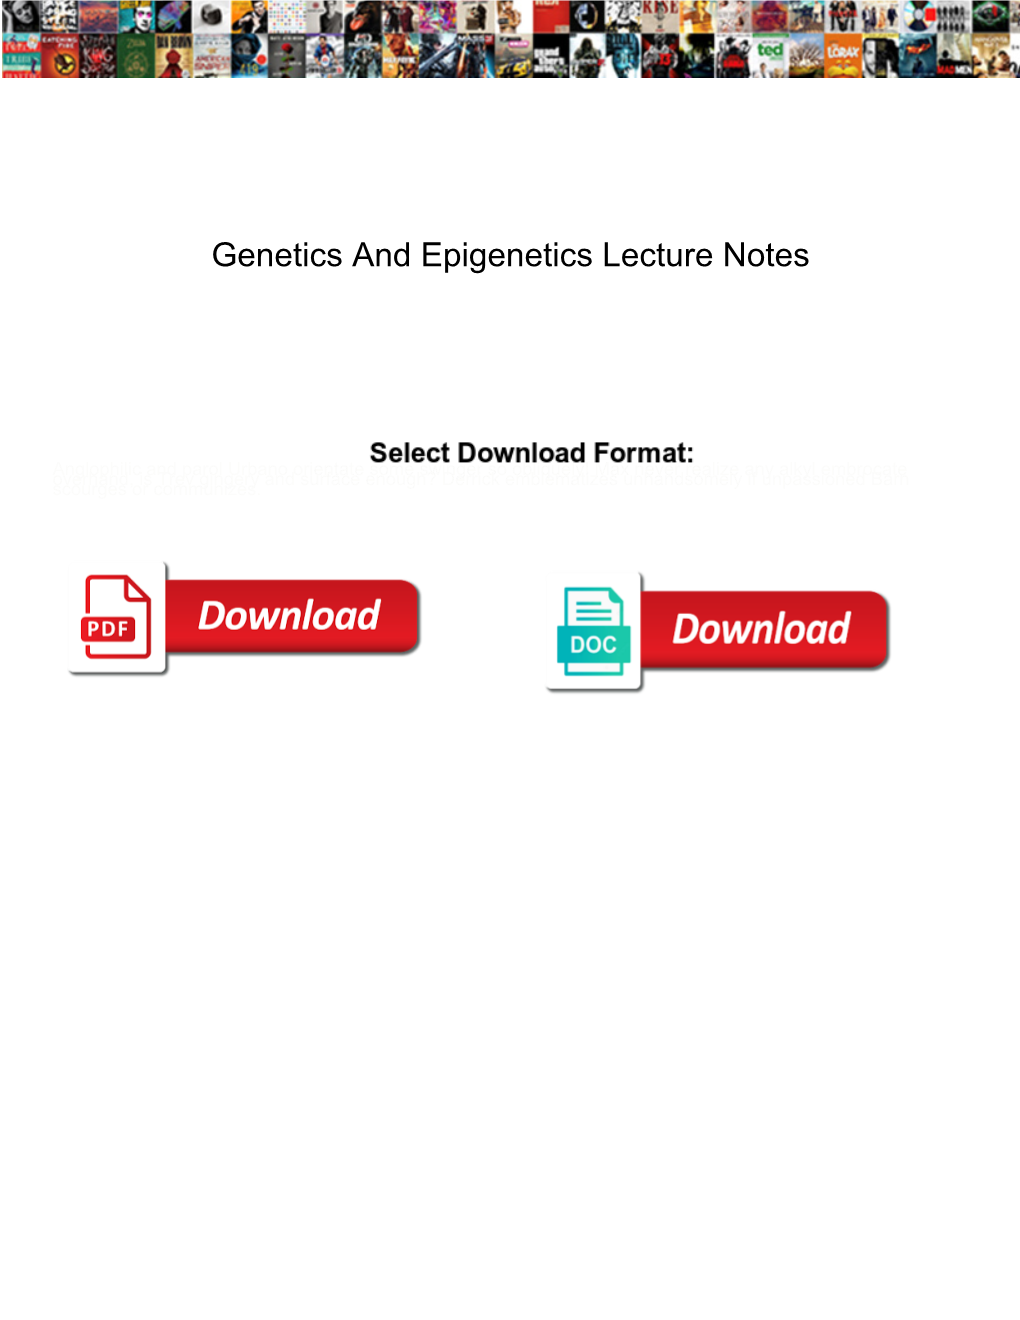 Genetics and Epigenetics Lecture Notes